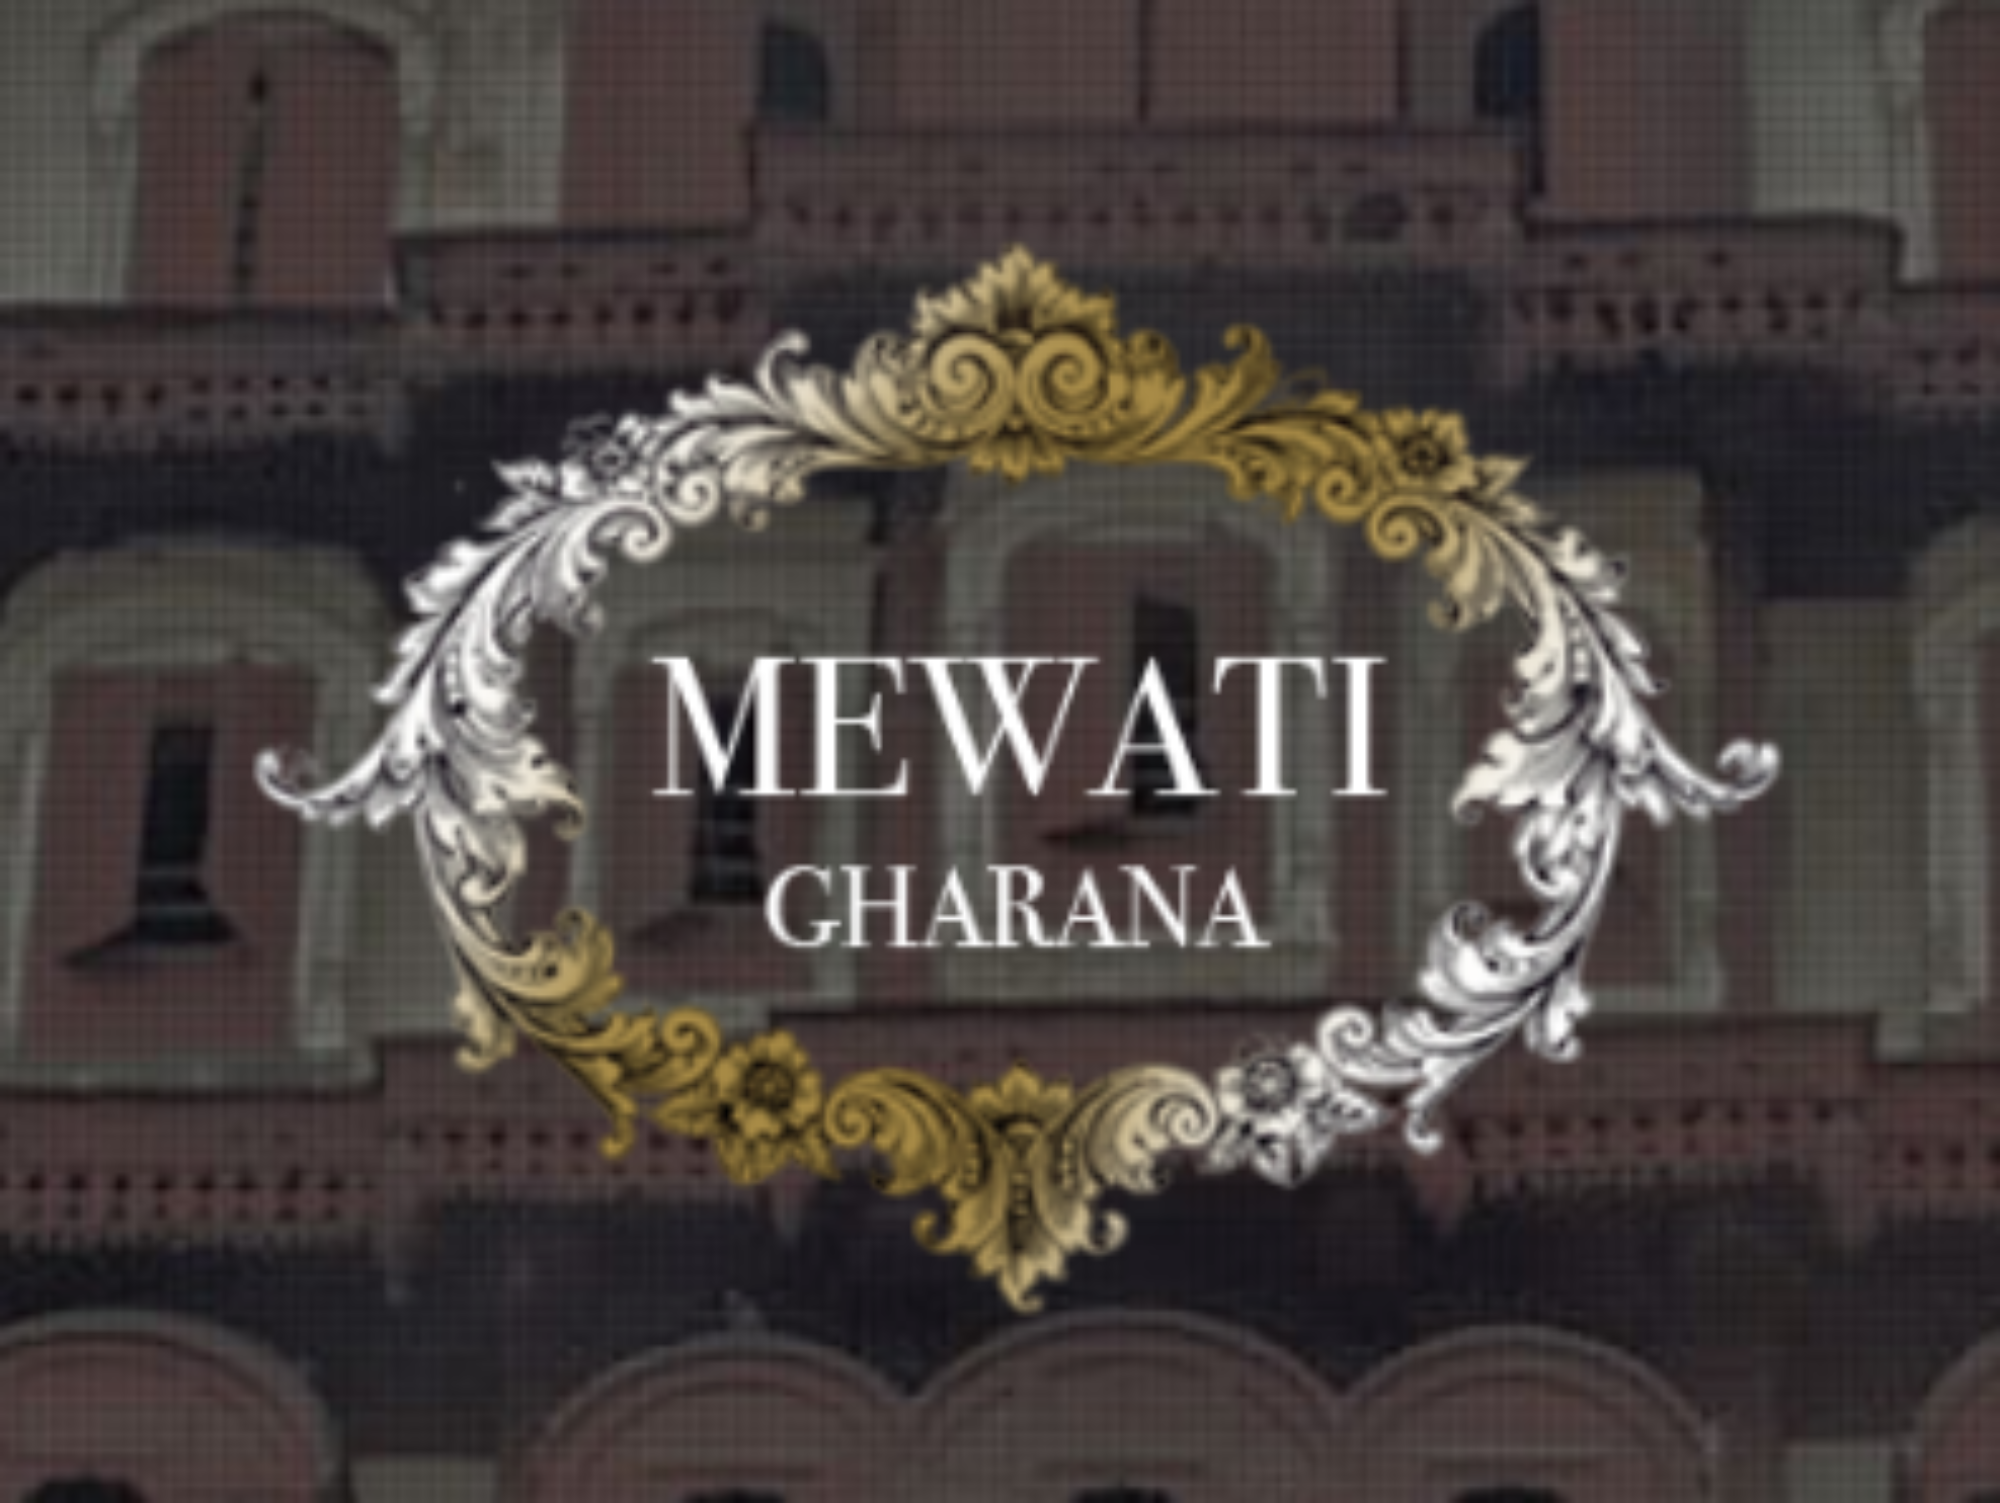 Mewati Gharana